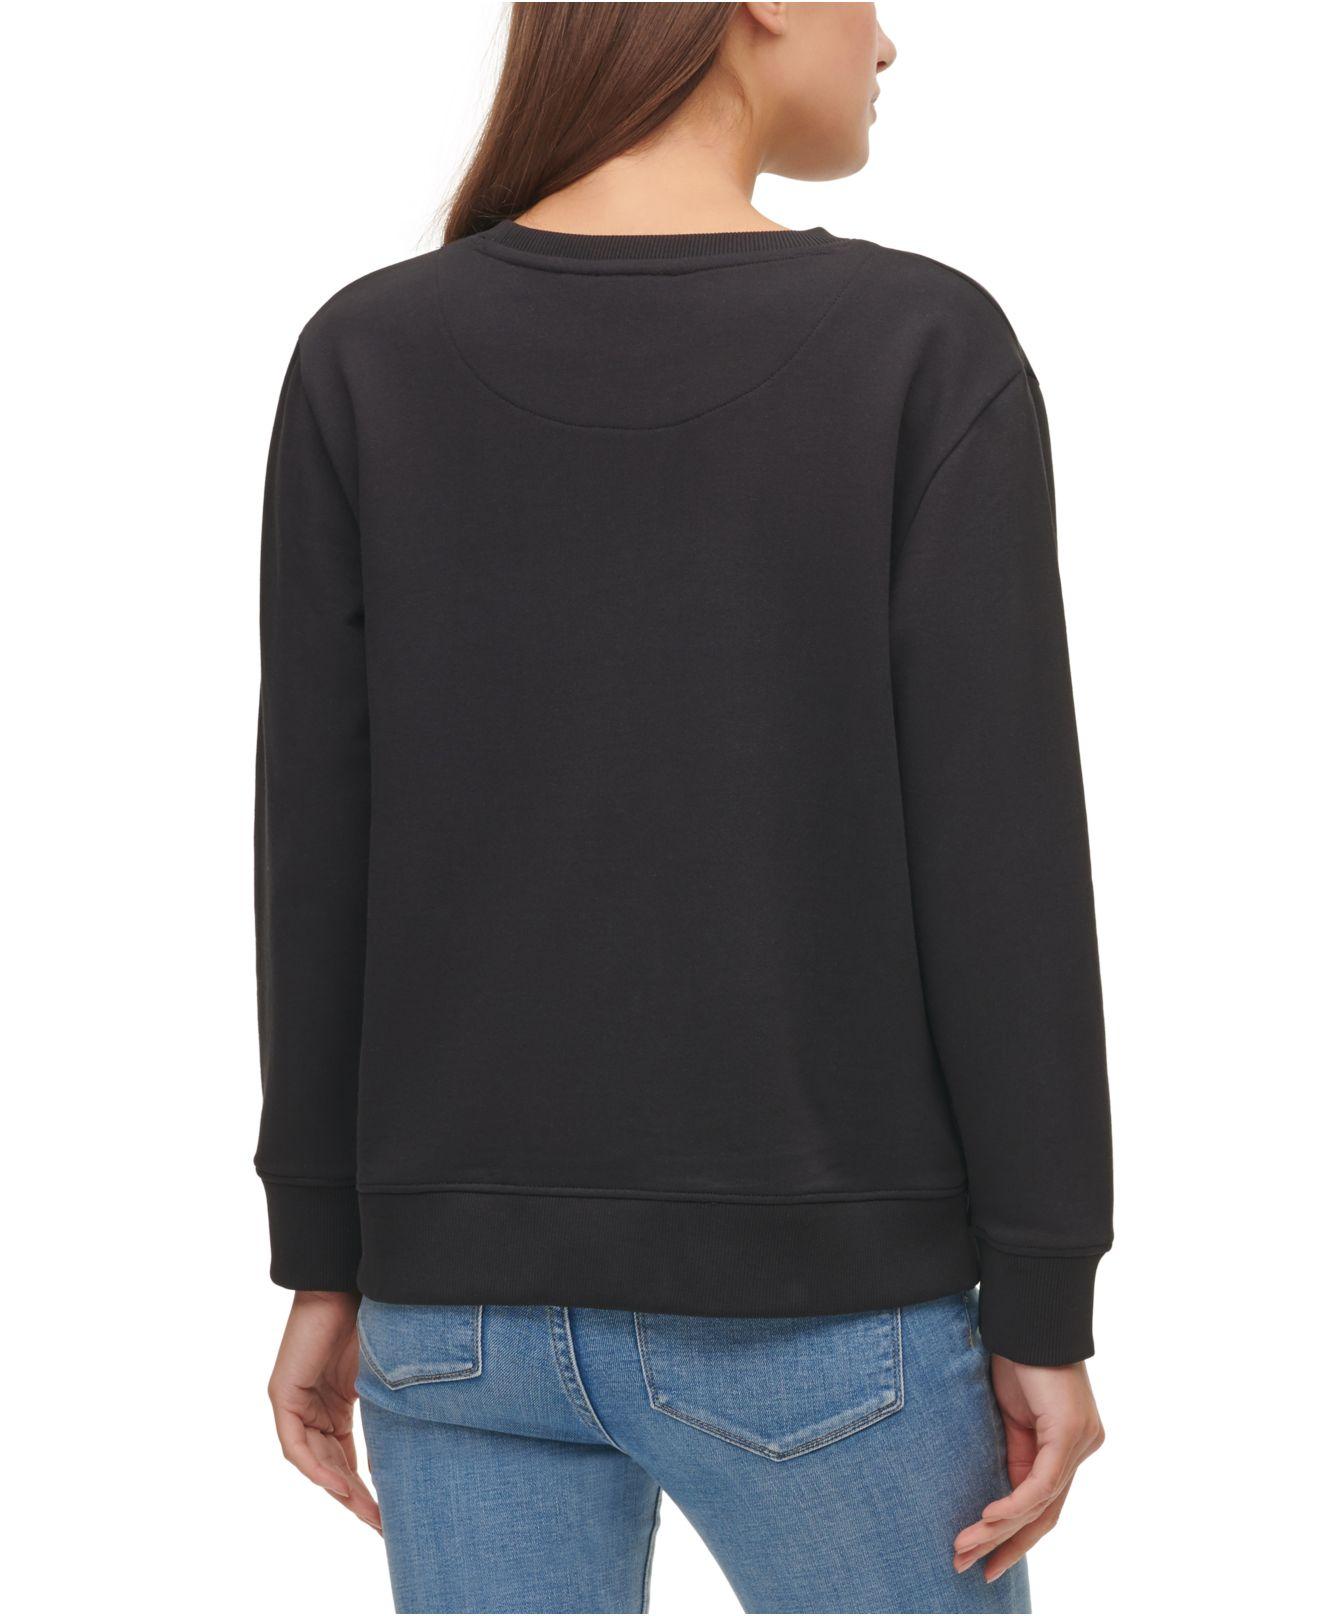 DKNY Cotton Martini Girl Sweatshirt in Black - Lyst